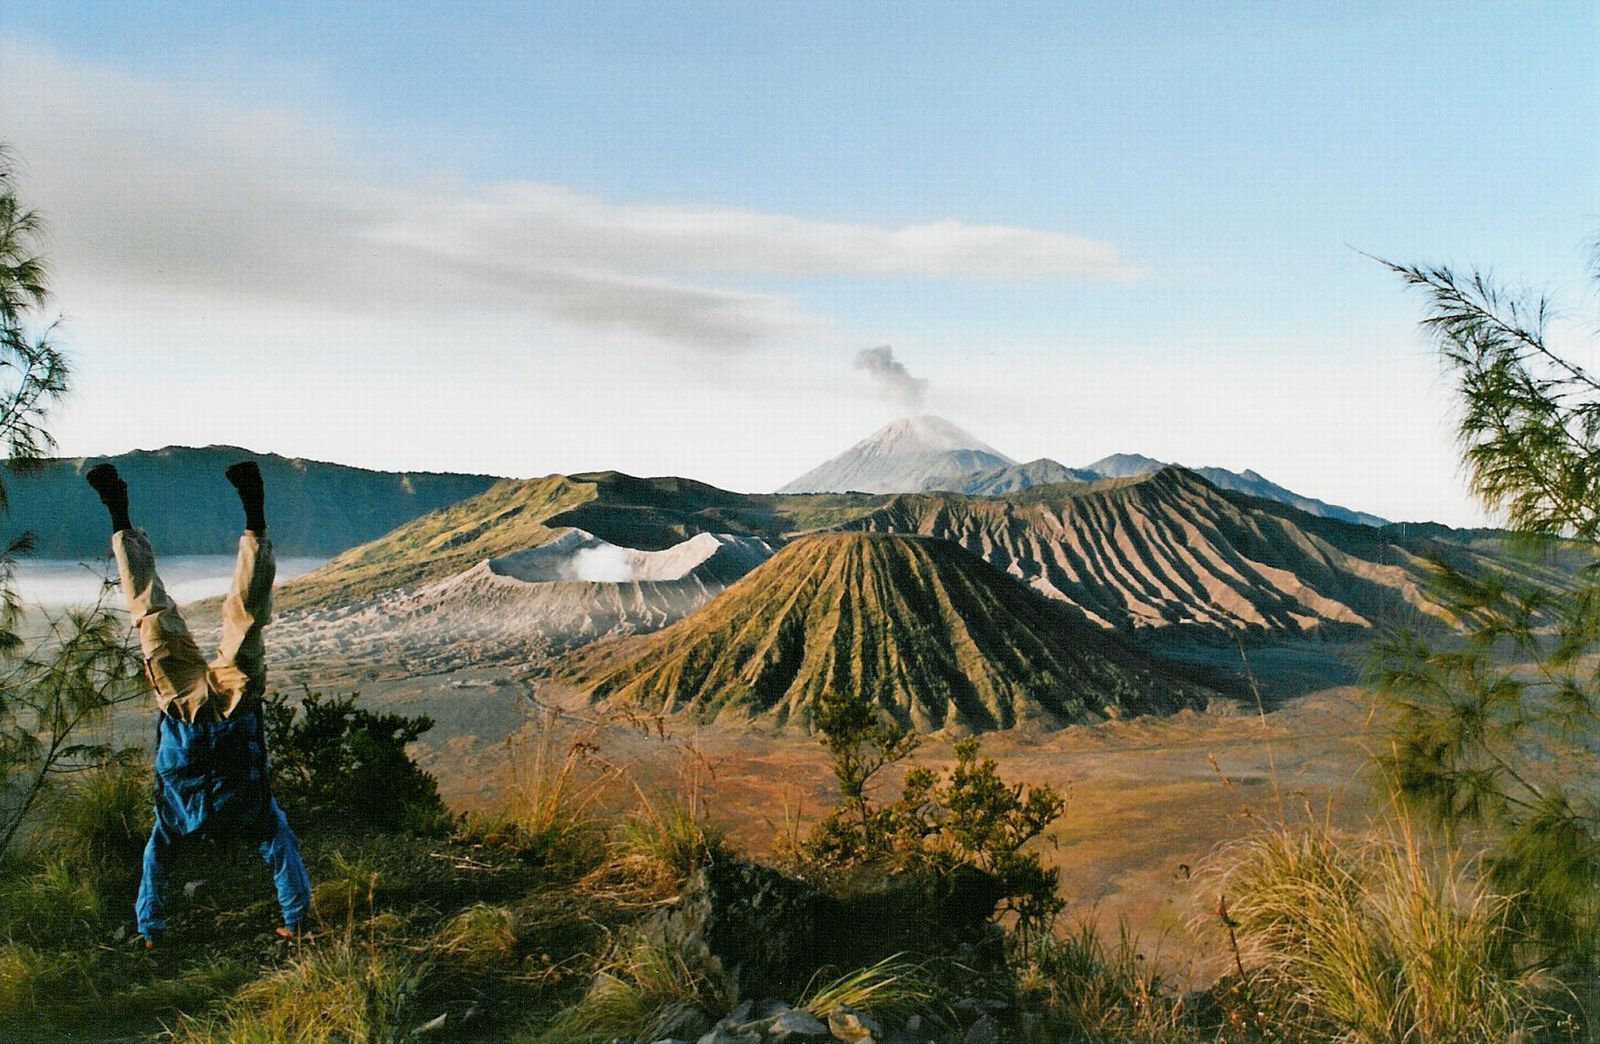 Mt. Bromo (Indonésie)